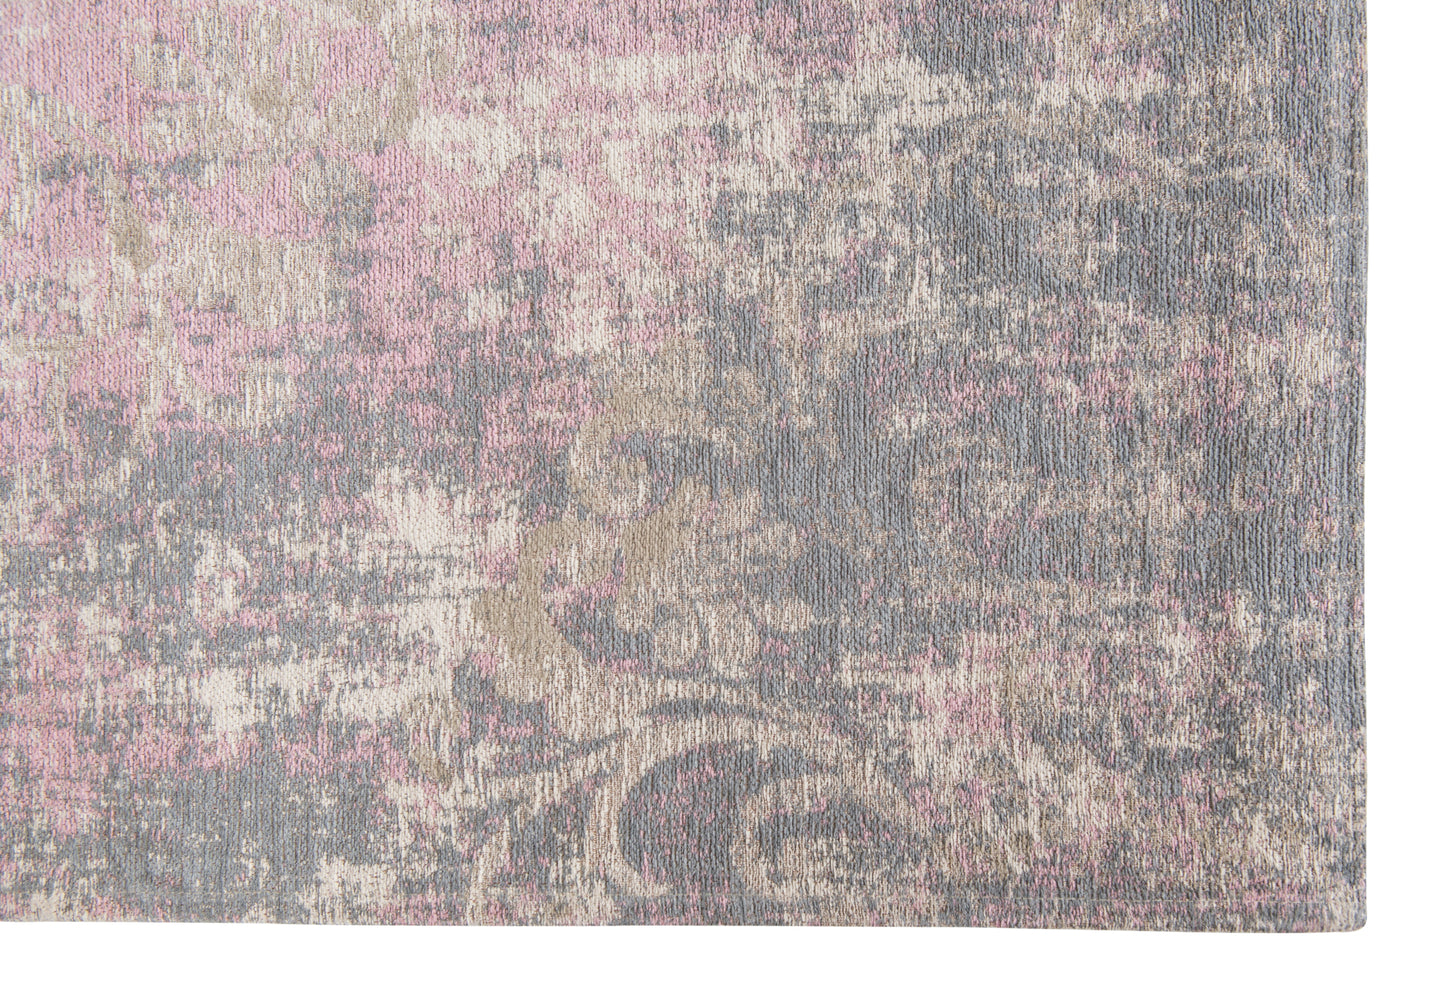 FWB-201: Jacquard carpet